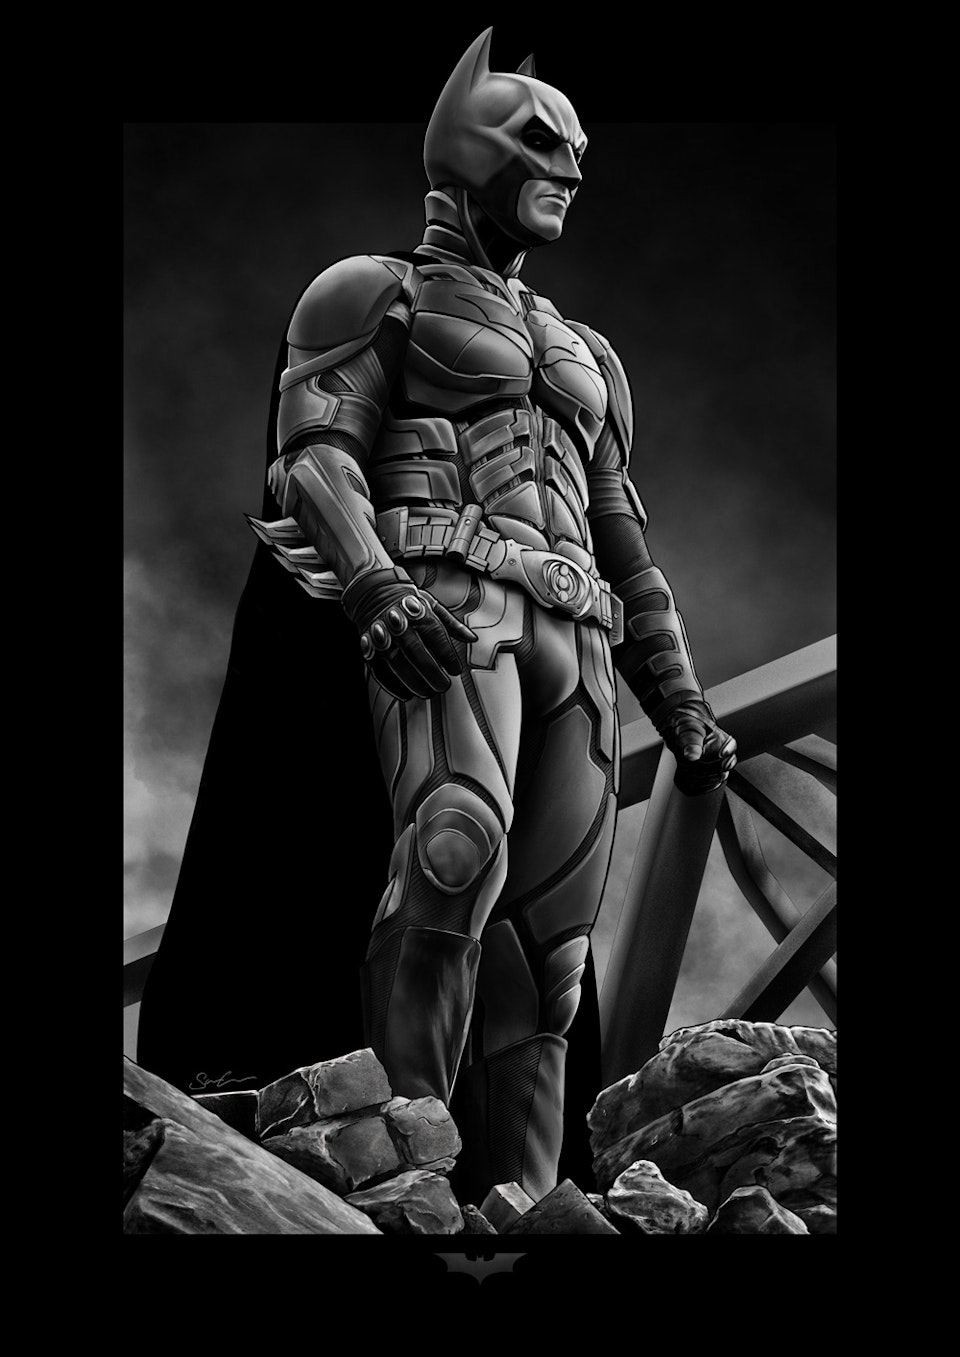 Batman Illustrations - The Dark Knight

Original greyscale drawing, made in Procreate.